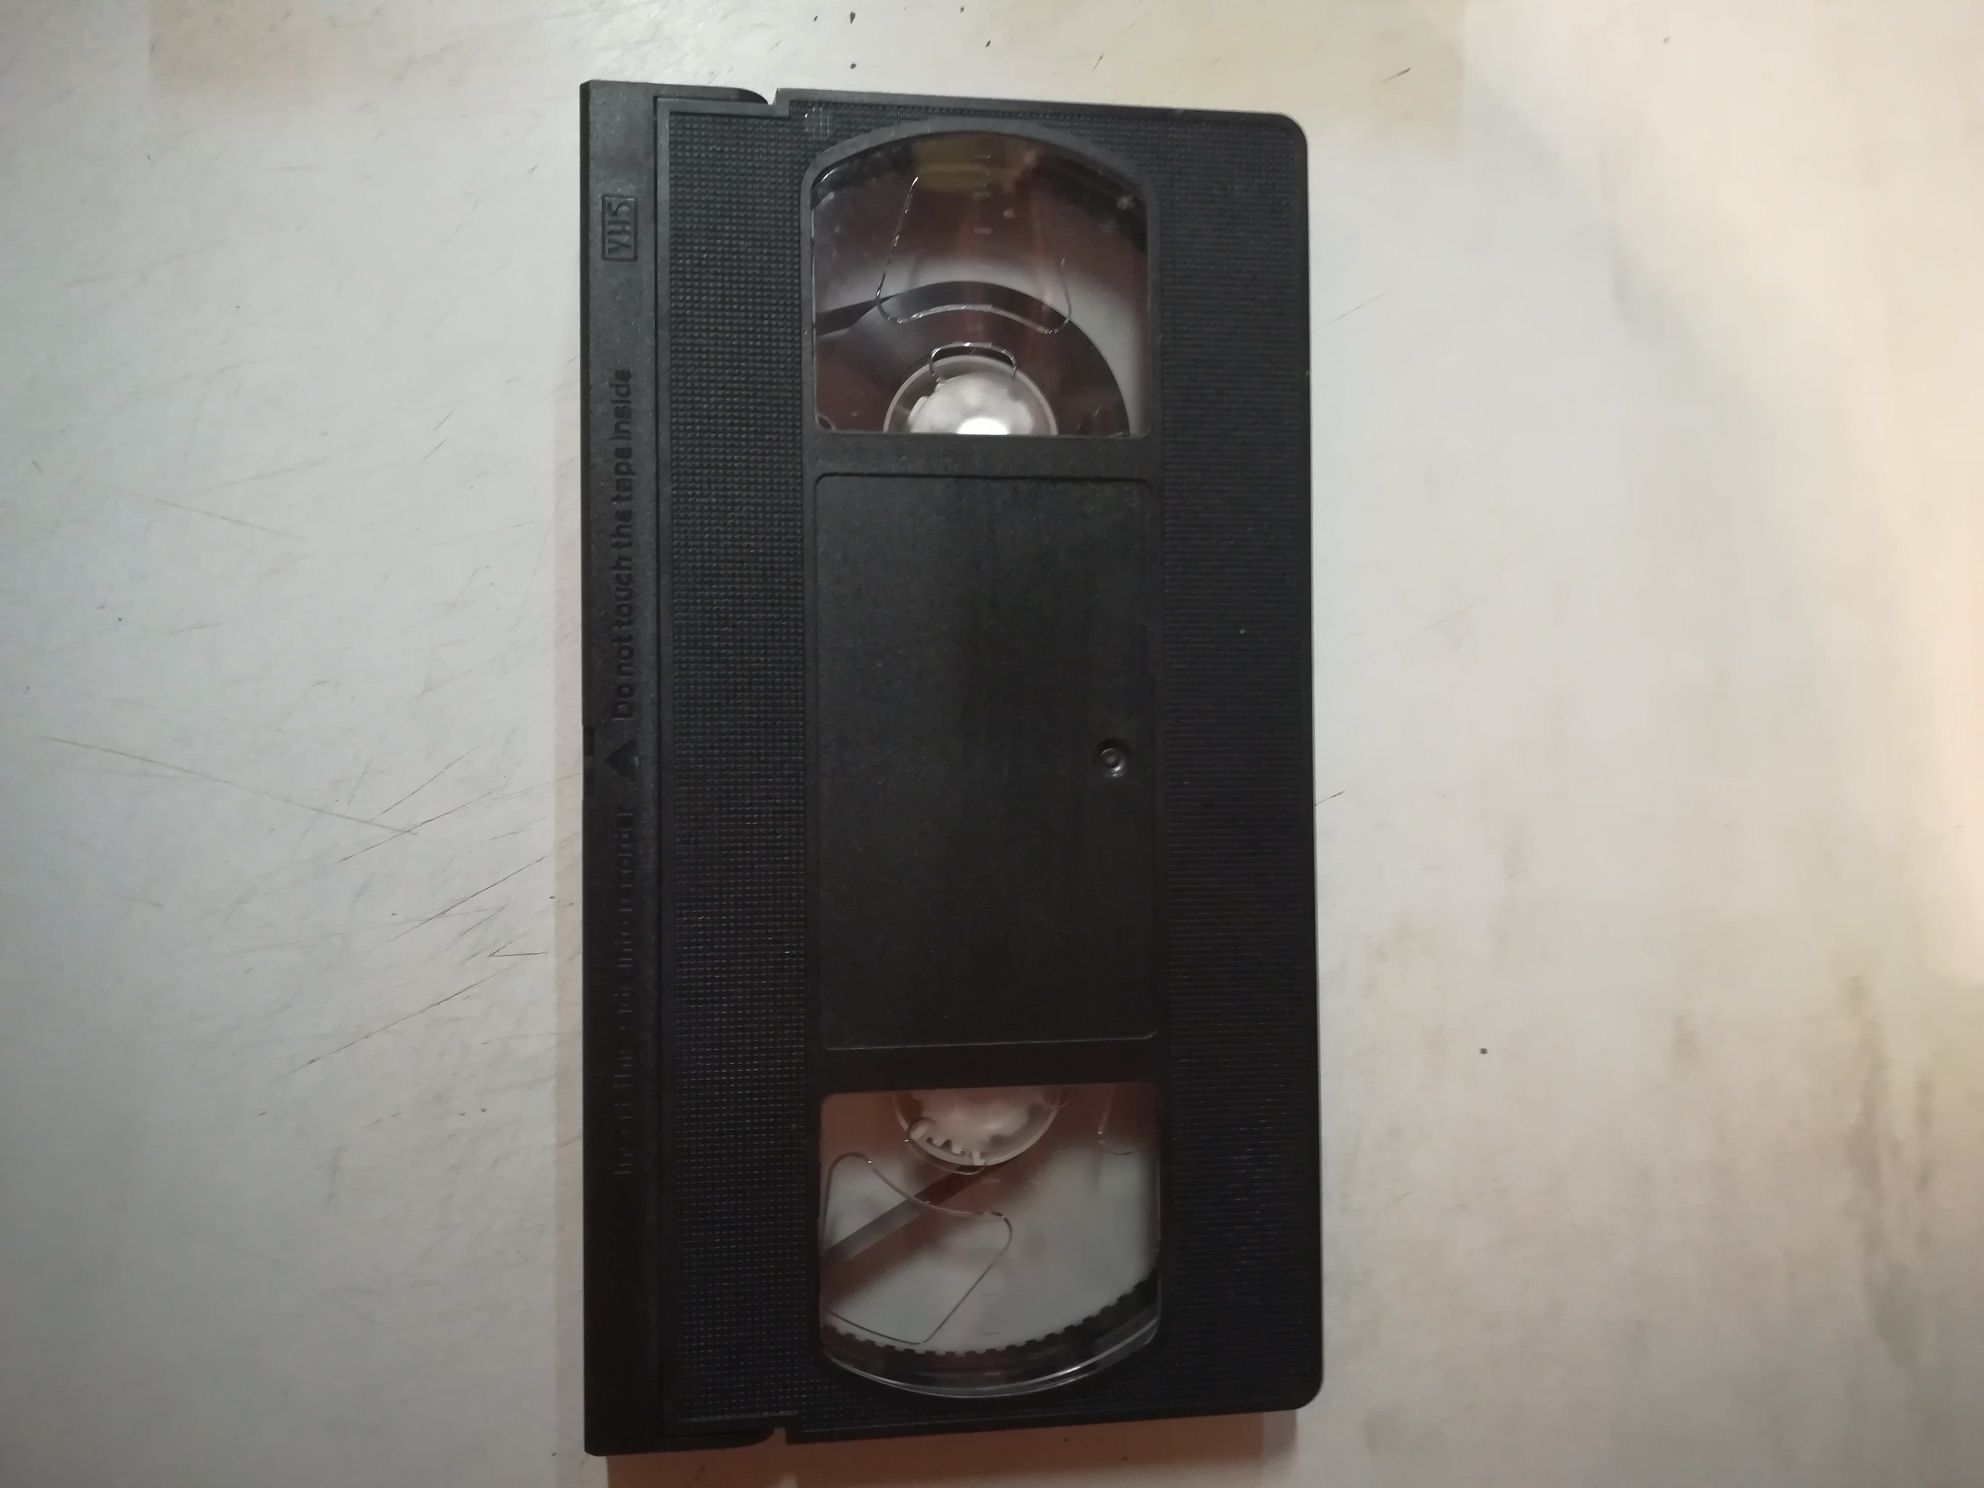 Księżniczka na ziarnku grochu - bajka - kaseta VHS